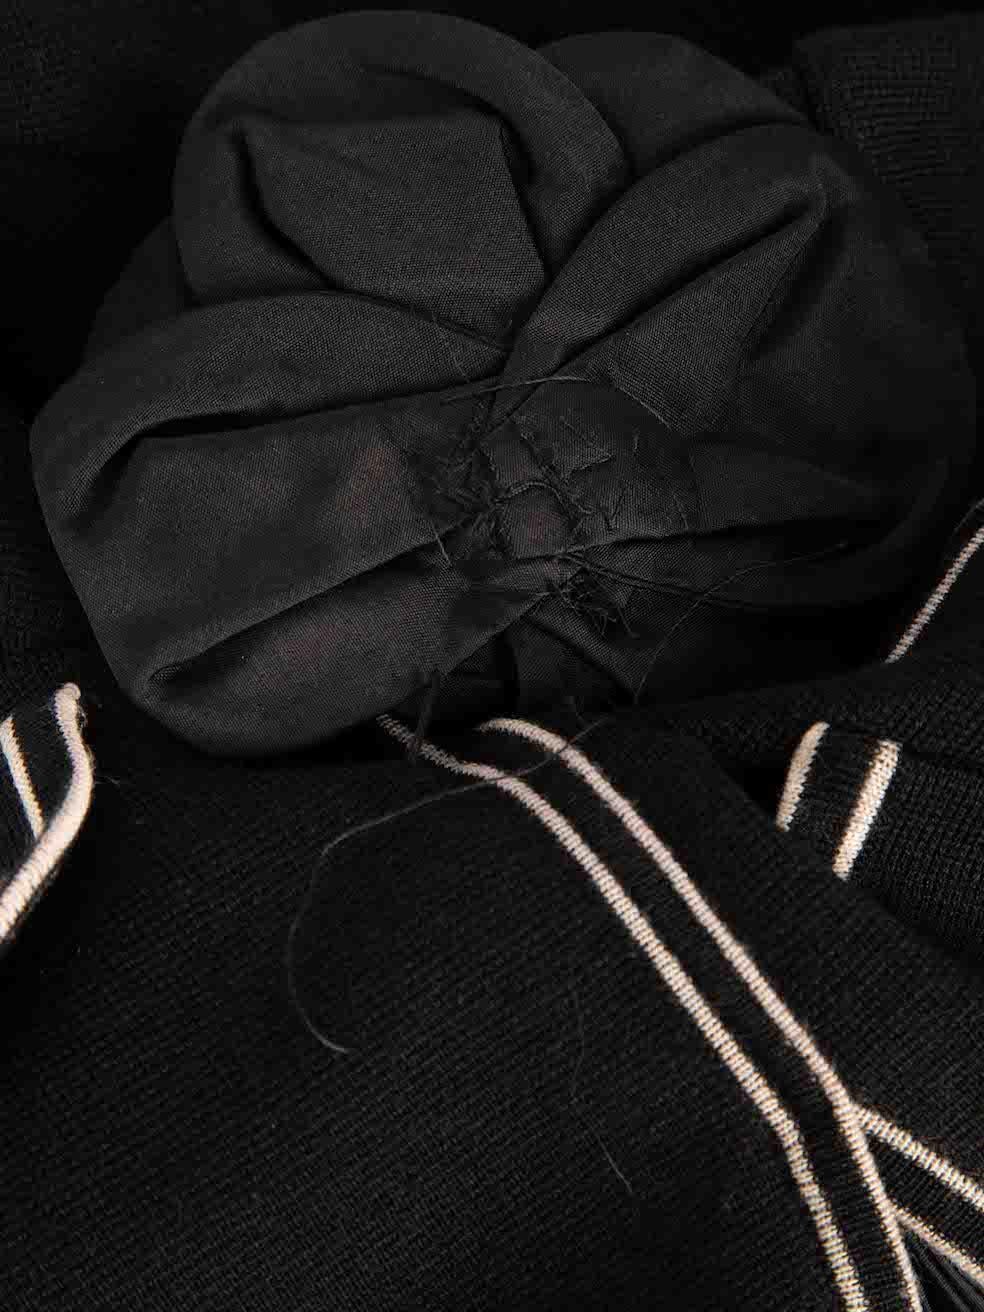 Moschino Women's Black Contrast Stitch Accent Knit Dress 1